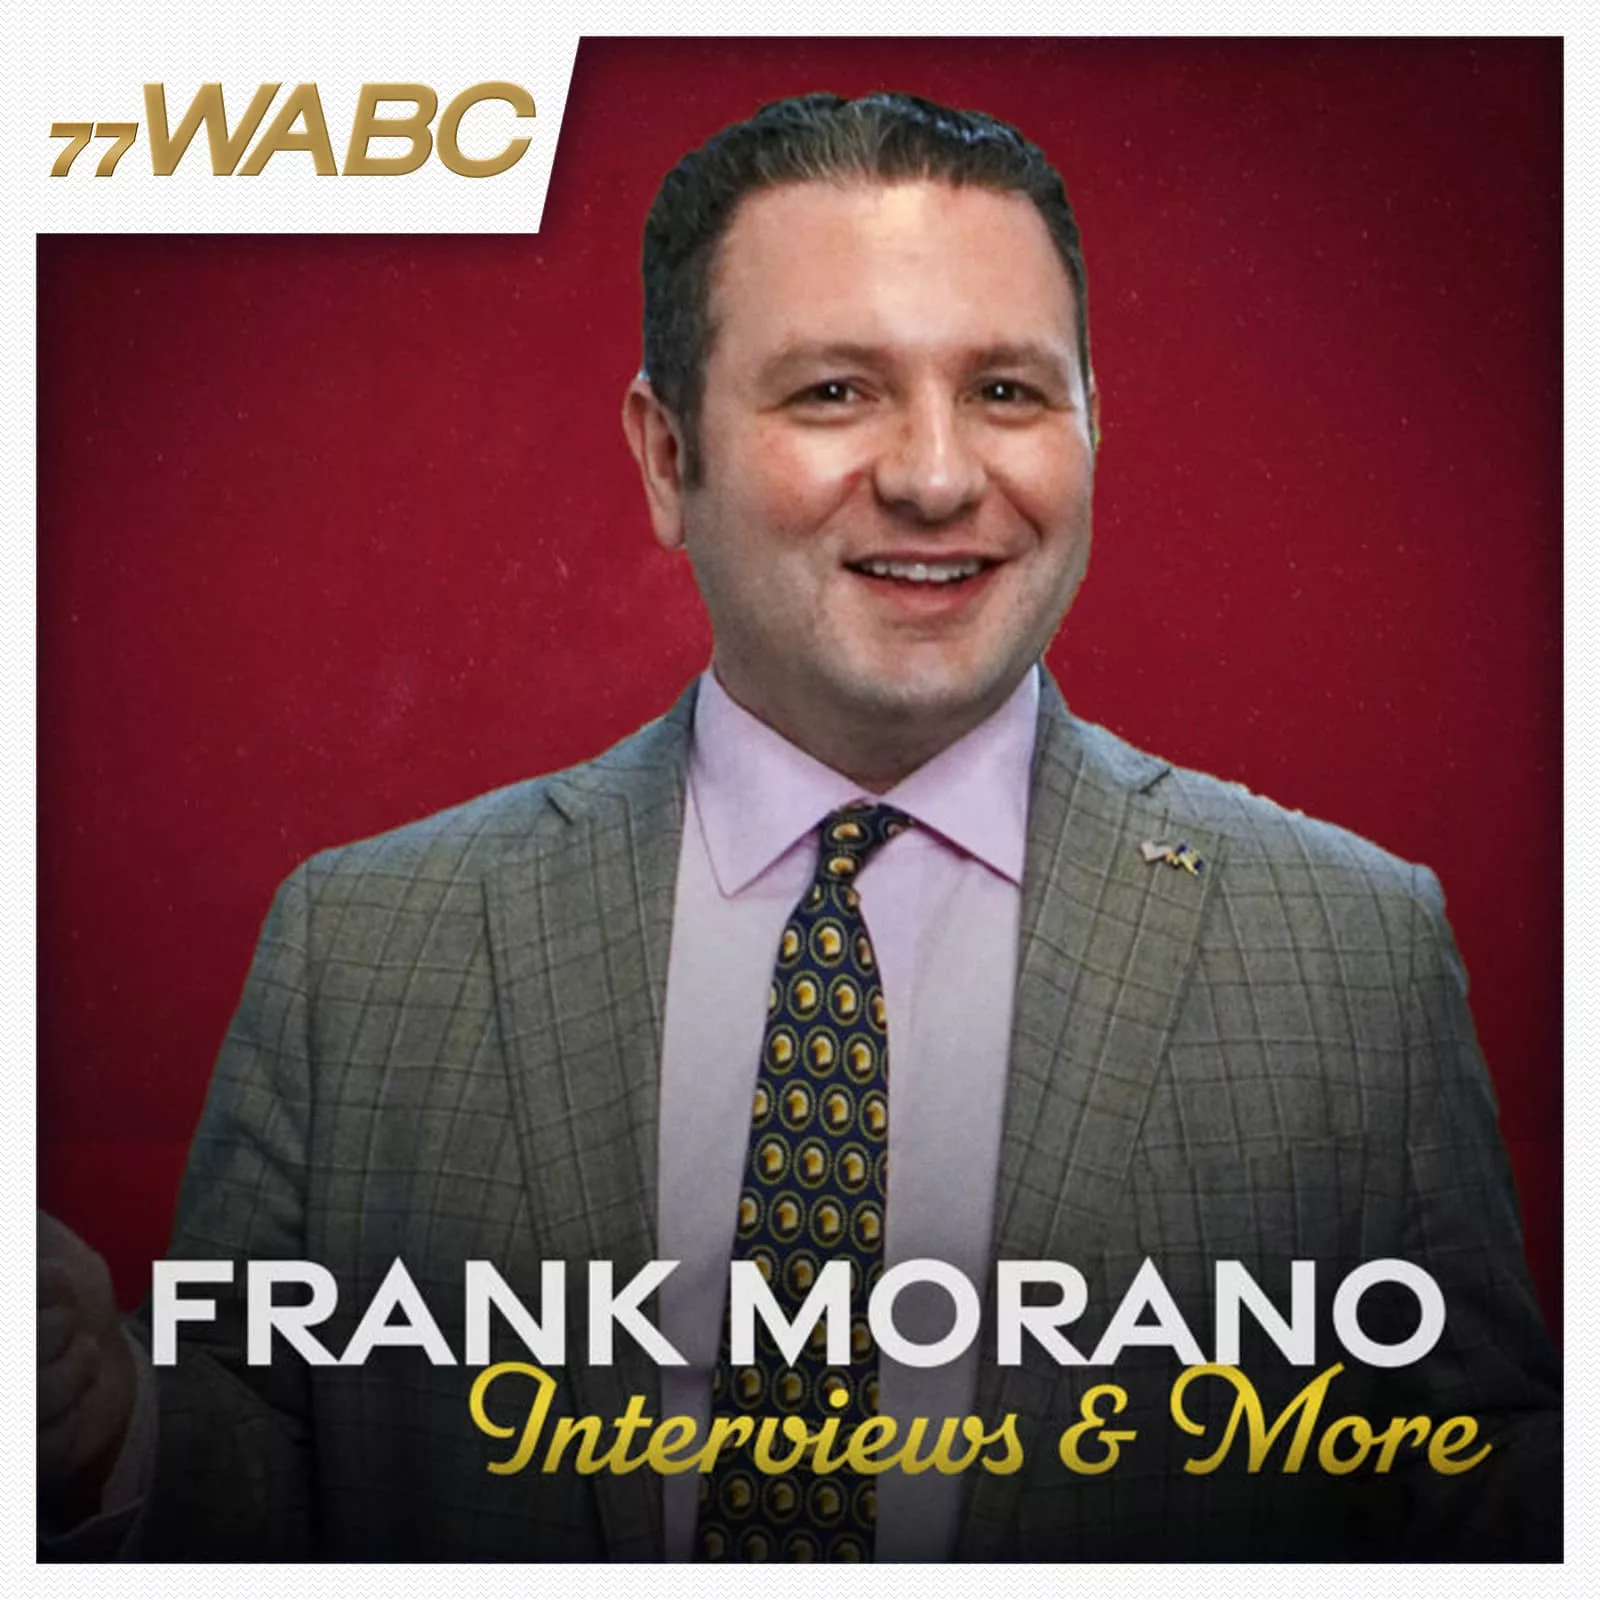 frank-morano-interviews-and-more-podcast-new-logo993563